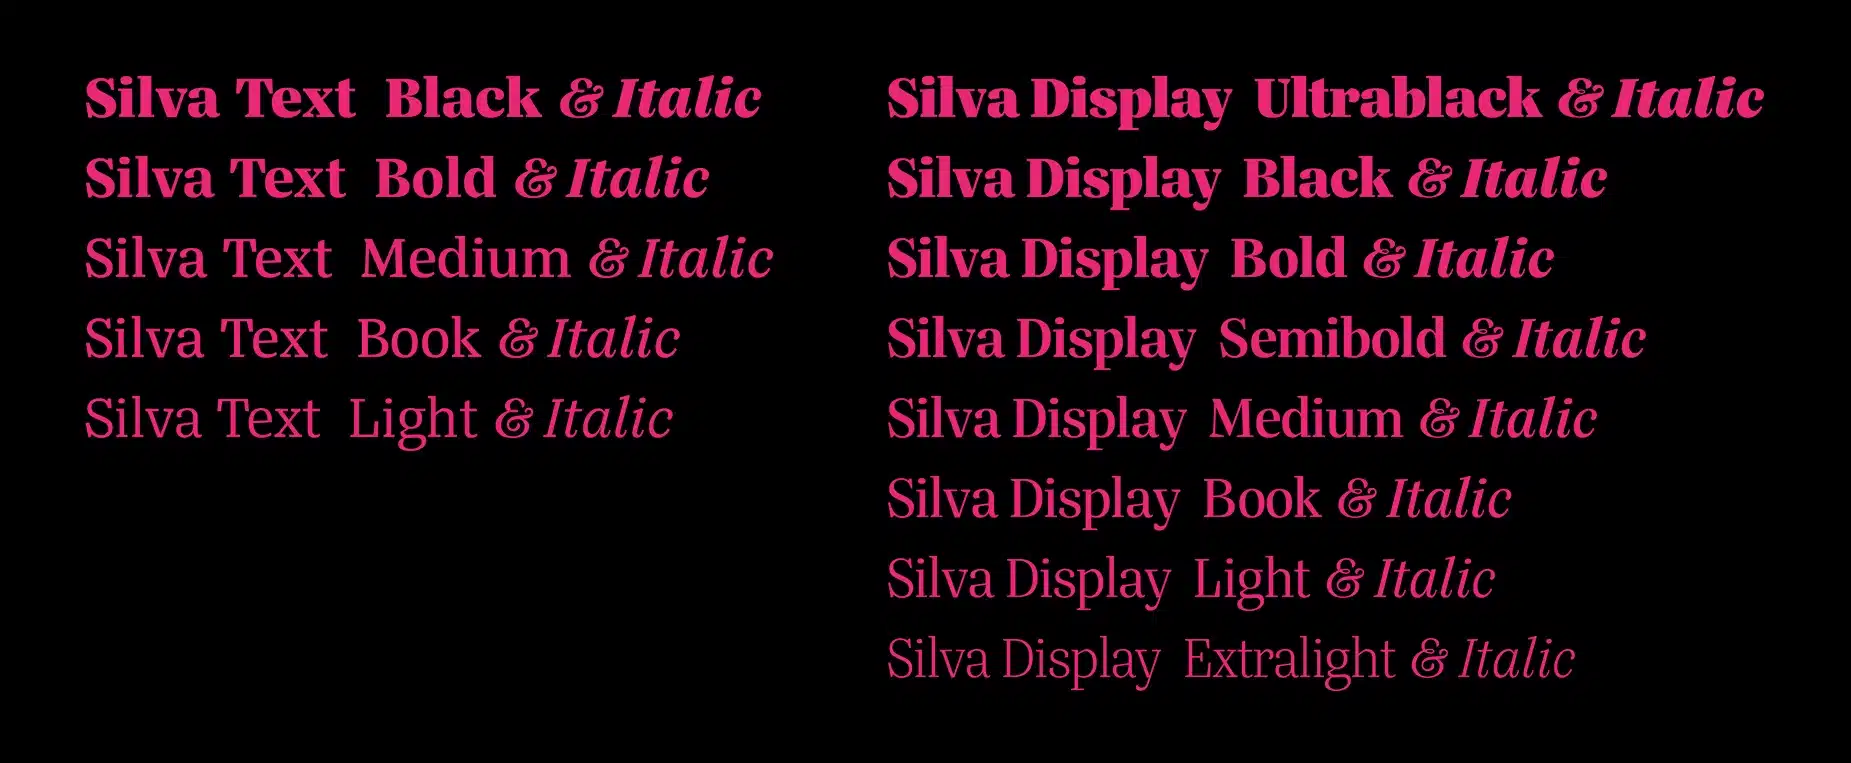 Silva Display Font View 2